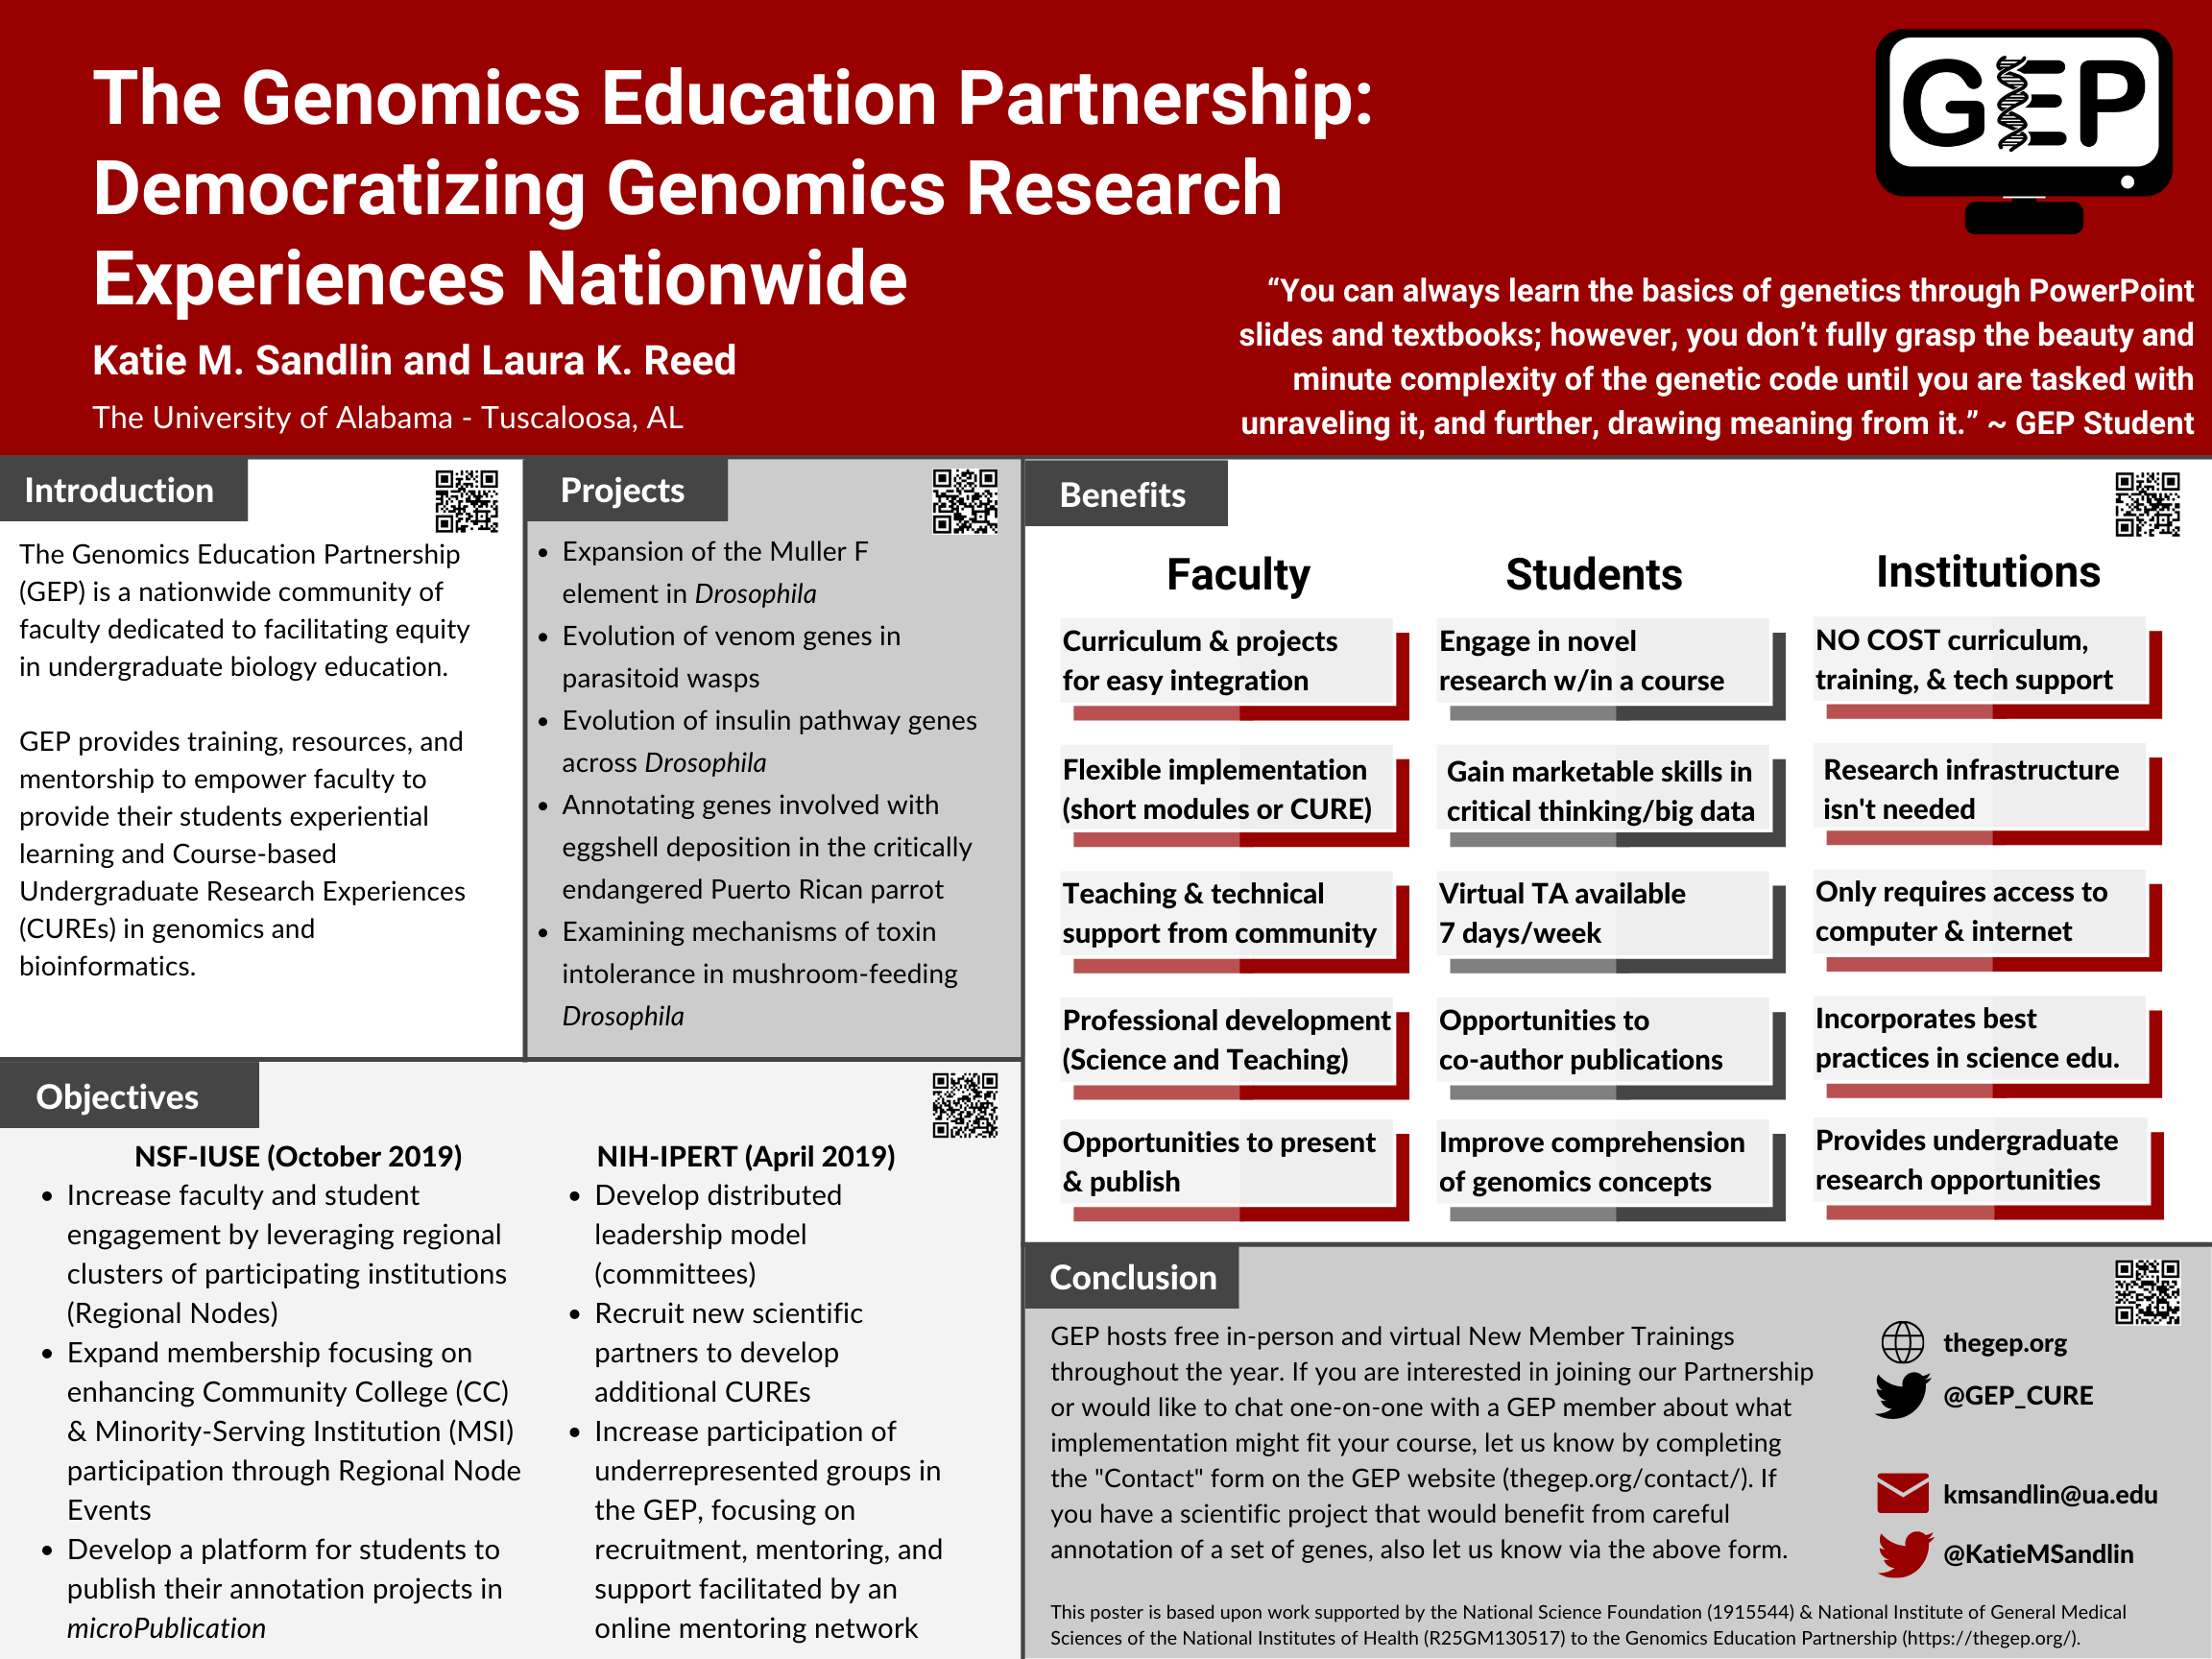 The Genomics Education Partnership: Democratizing Genomics Research Experiences Nationwide